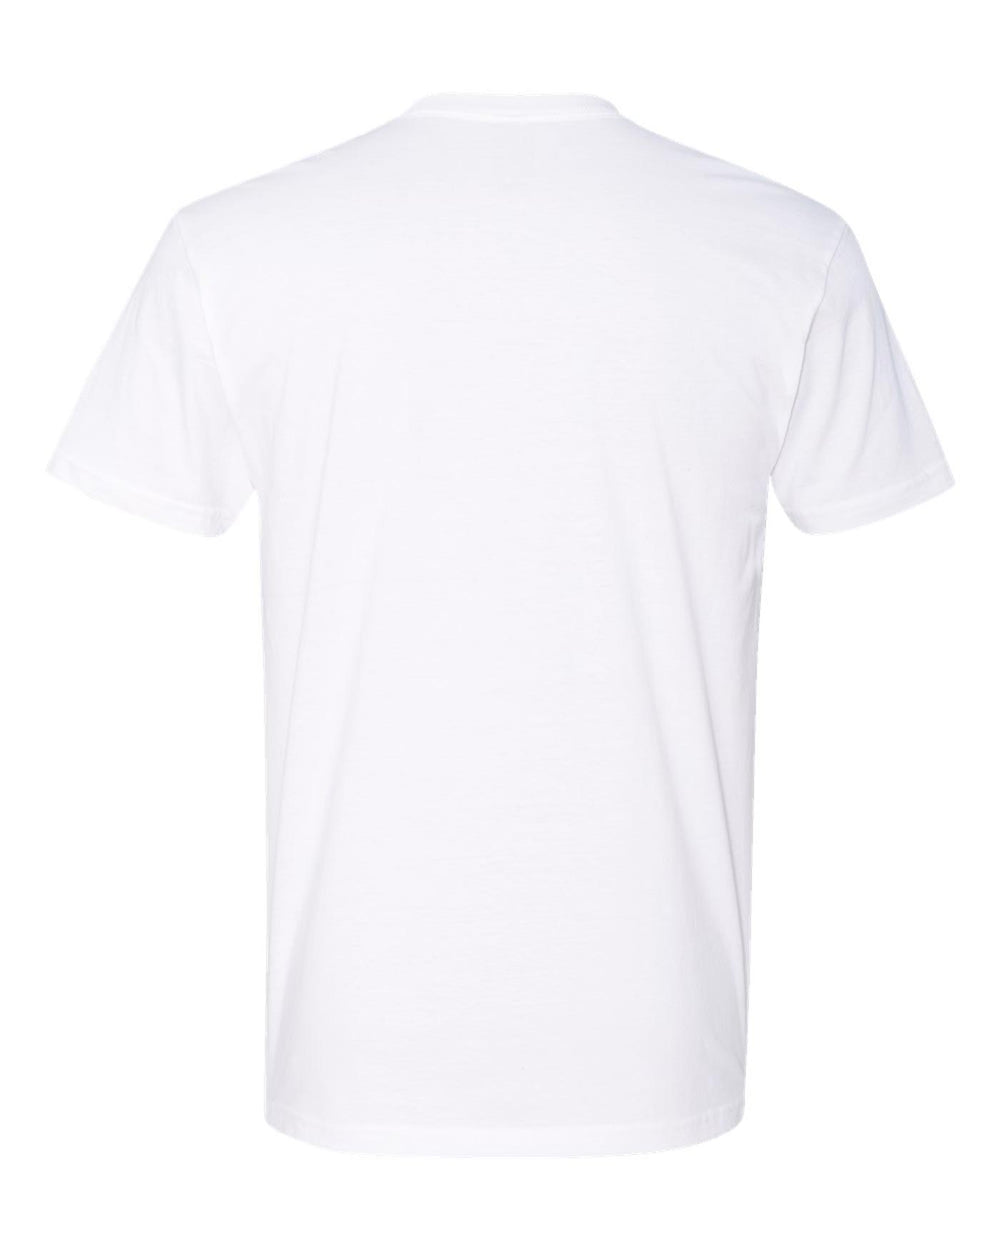 Back of Nudge Printing white t shirt